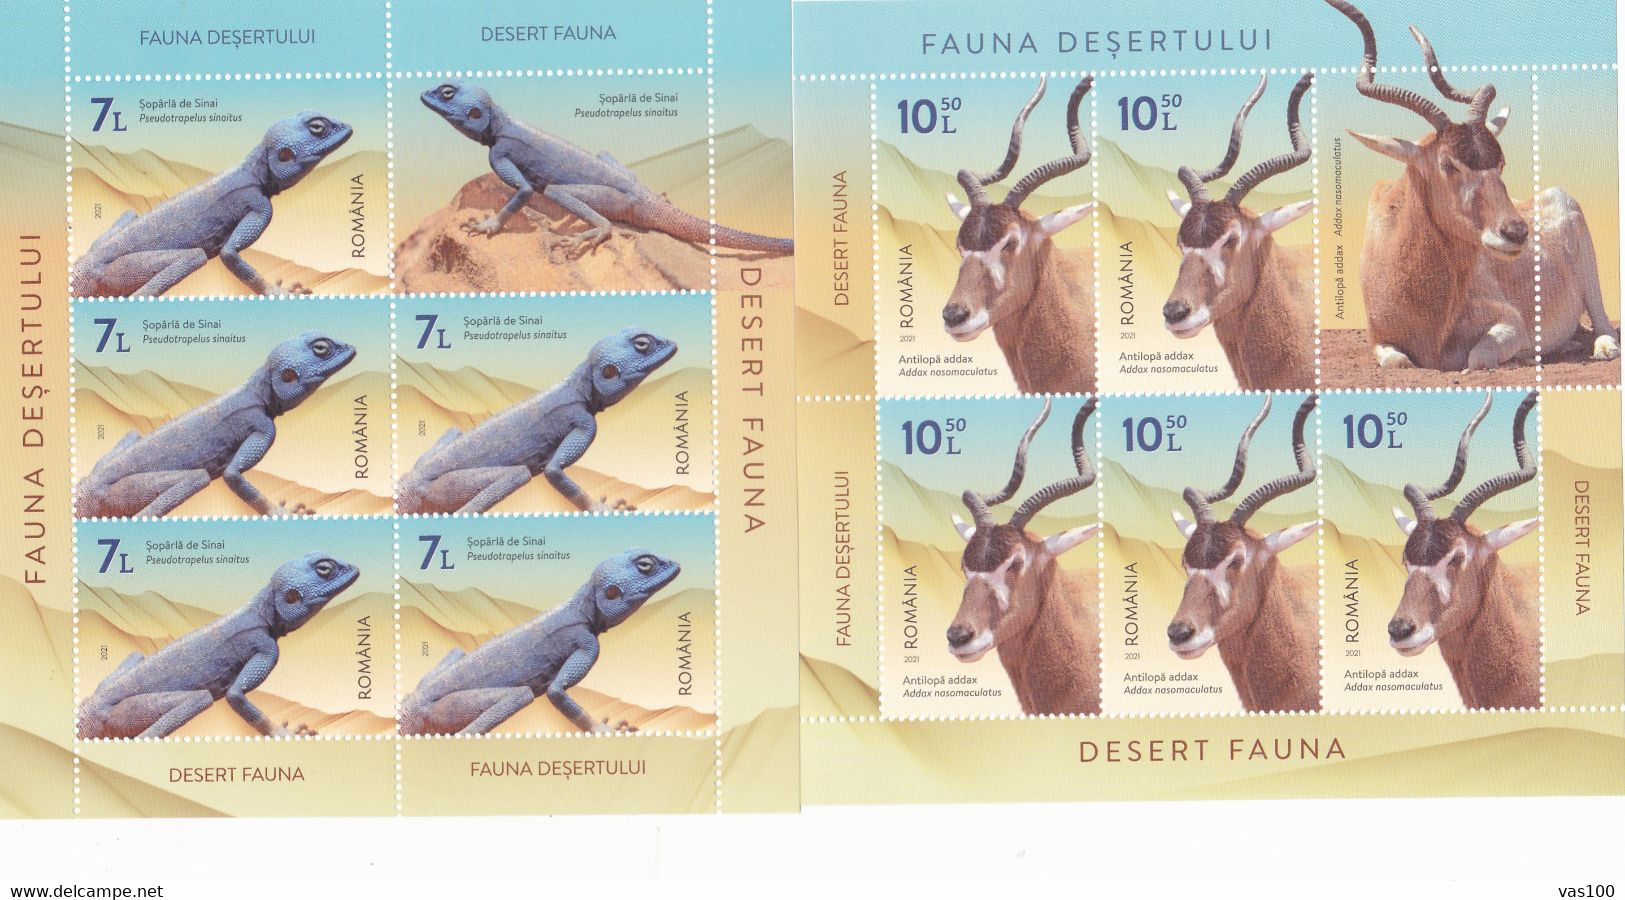 ROMANIA - 2021 - DESERT FAUNA - Dromedary ,Lizard, Fox, Antelope - Set 4 Sheetlets Of 5 Stamps+ 1 Label MNH** - Hojas Completas